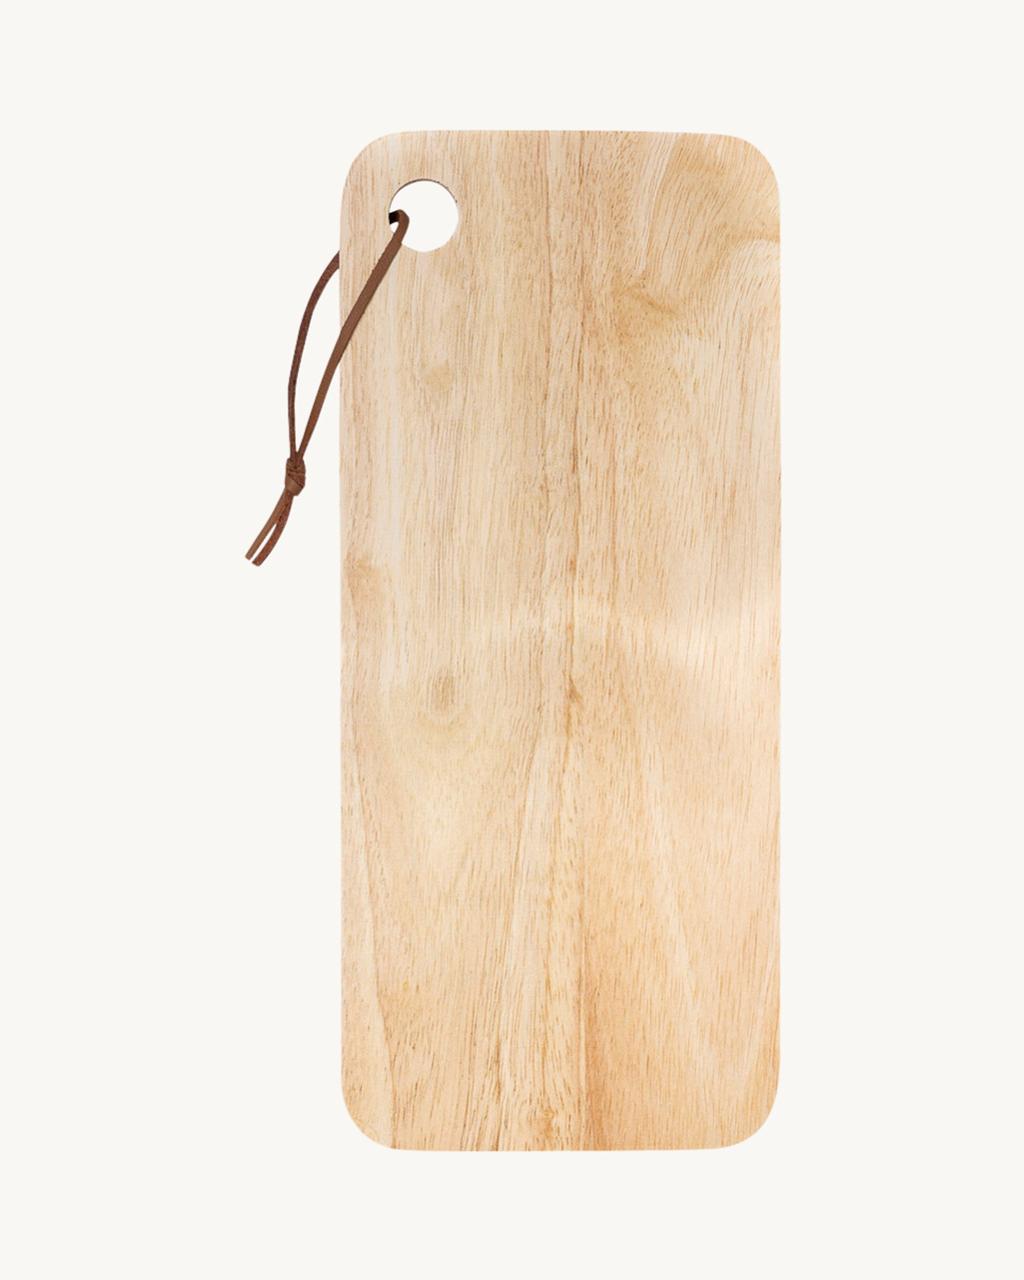 Turfjøla, hiking wooden chopping board